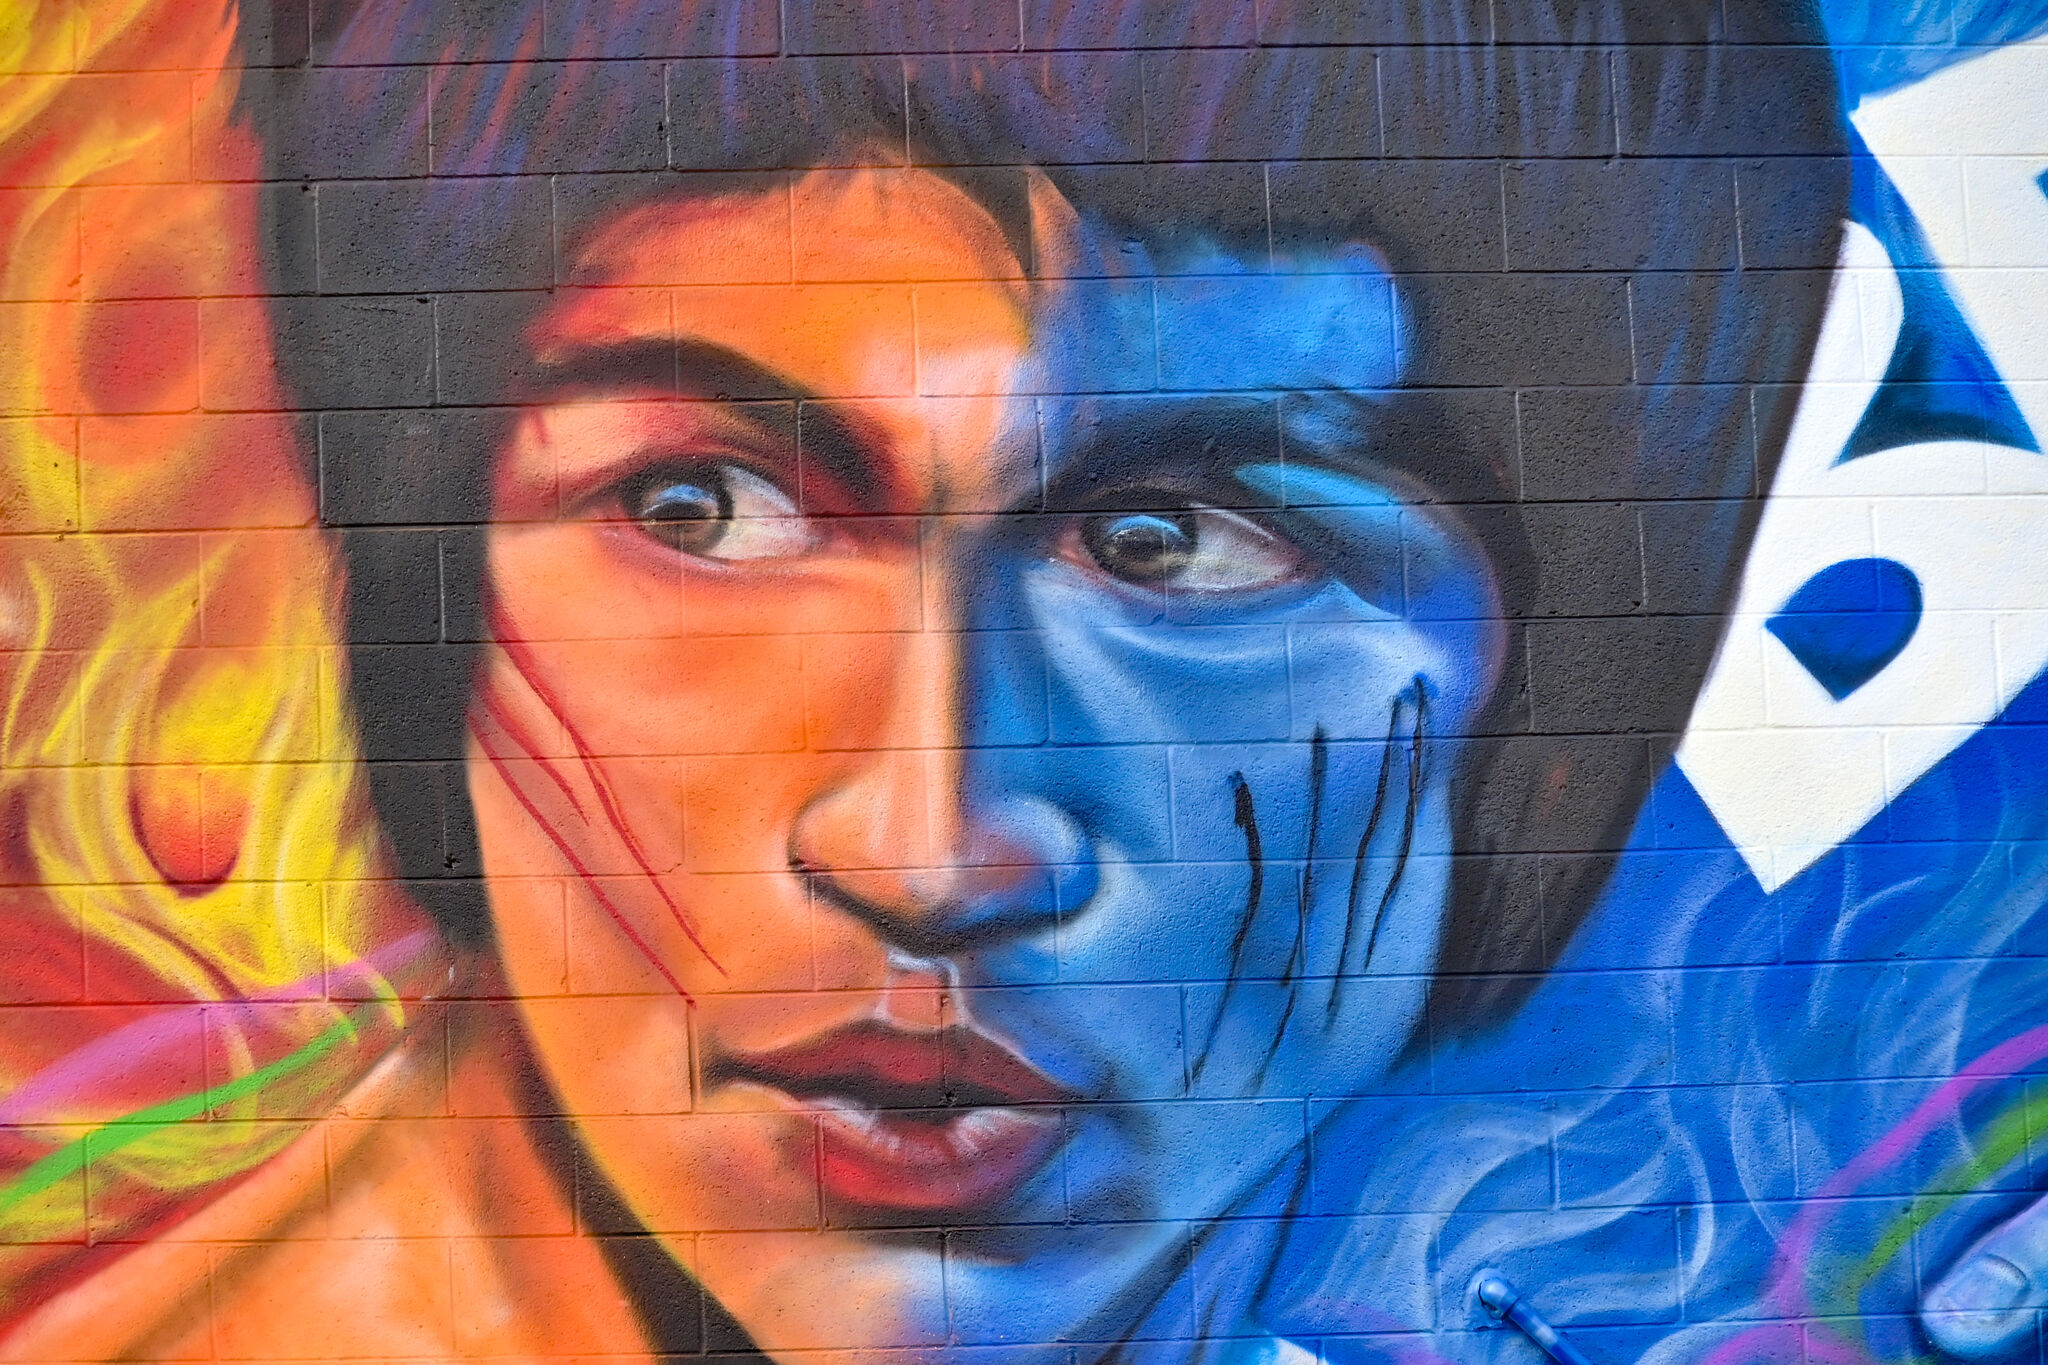 artistraman&mdash;Bruce Lee